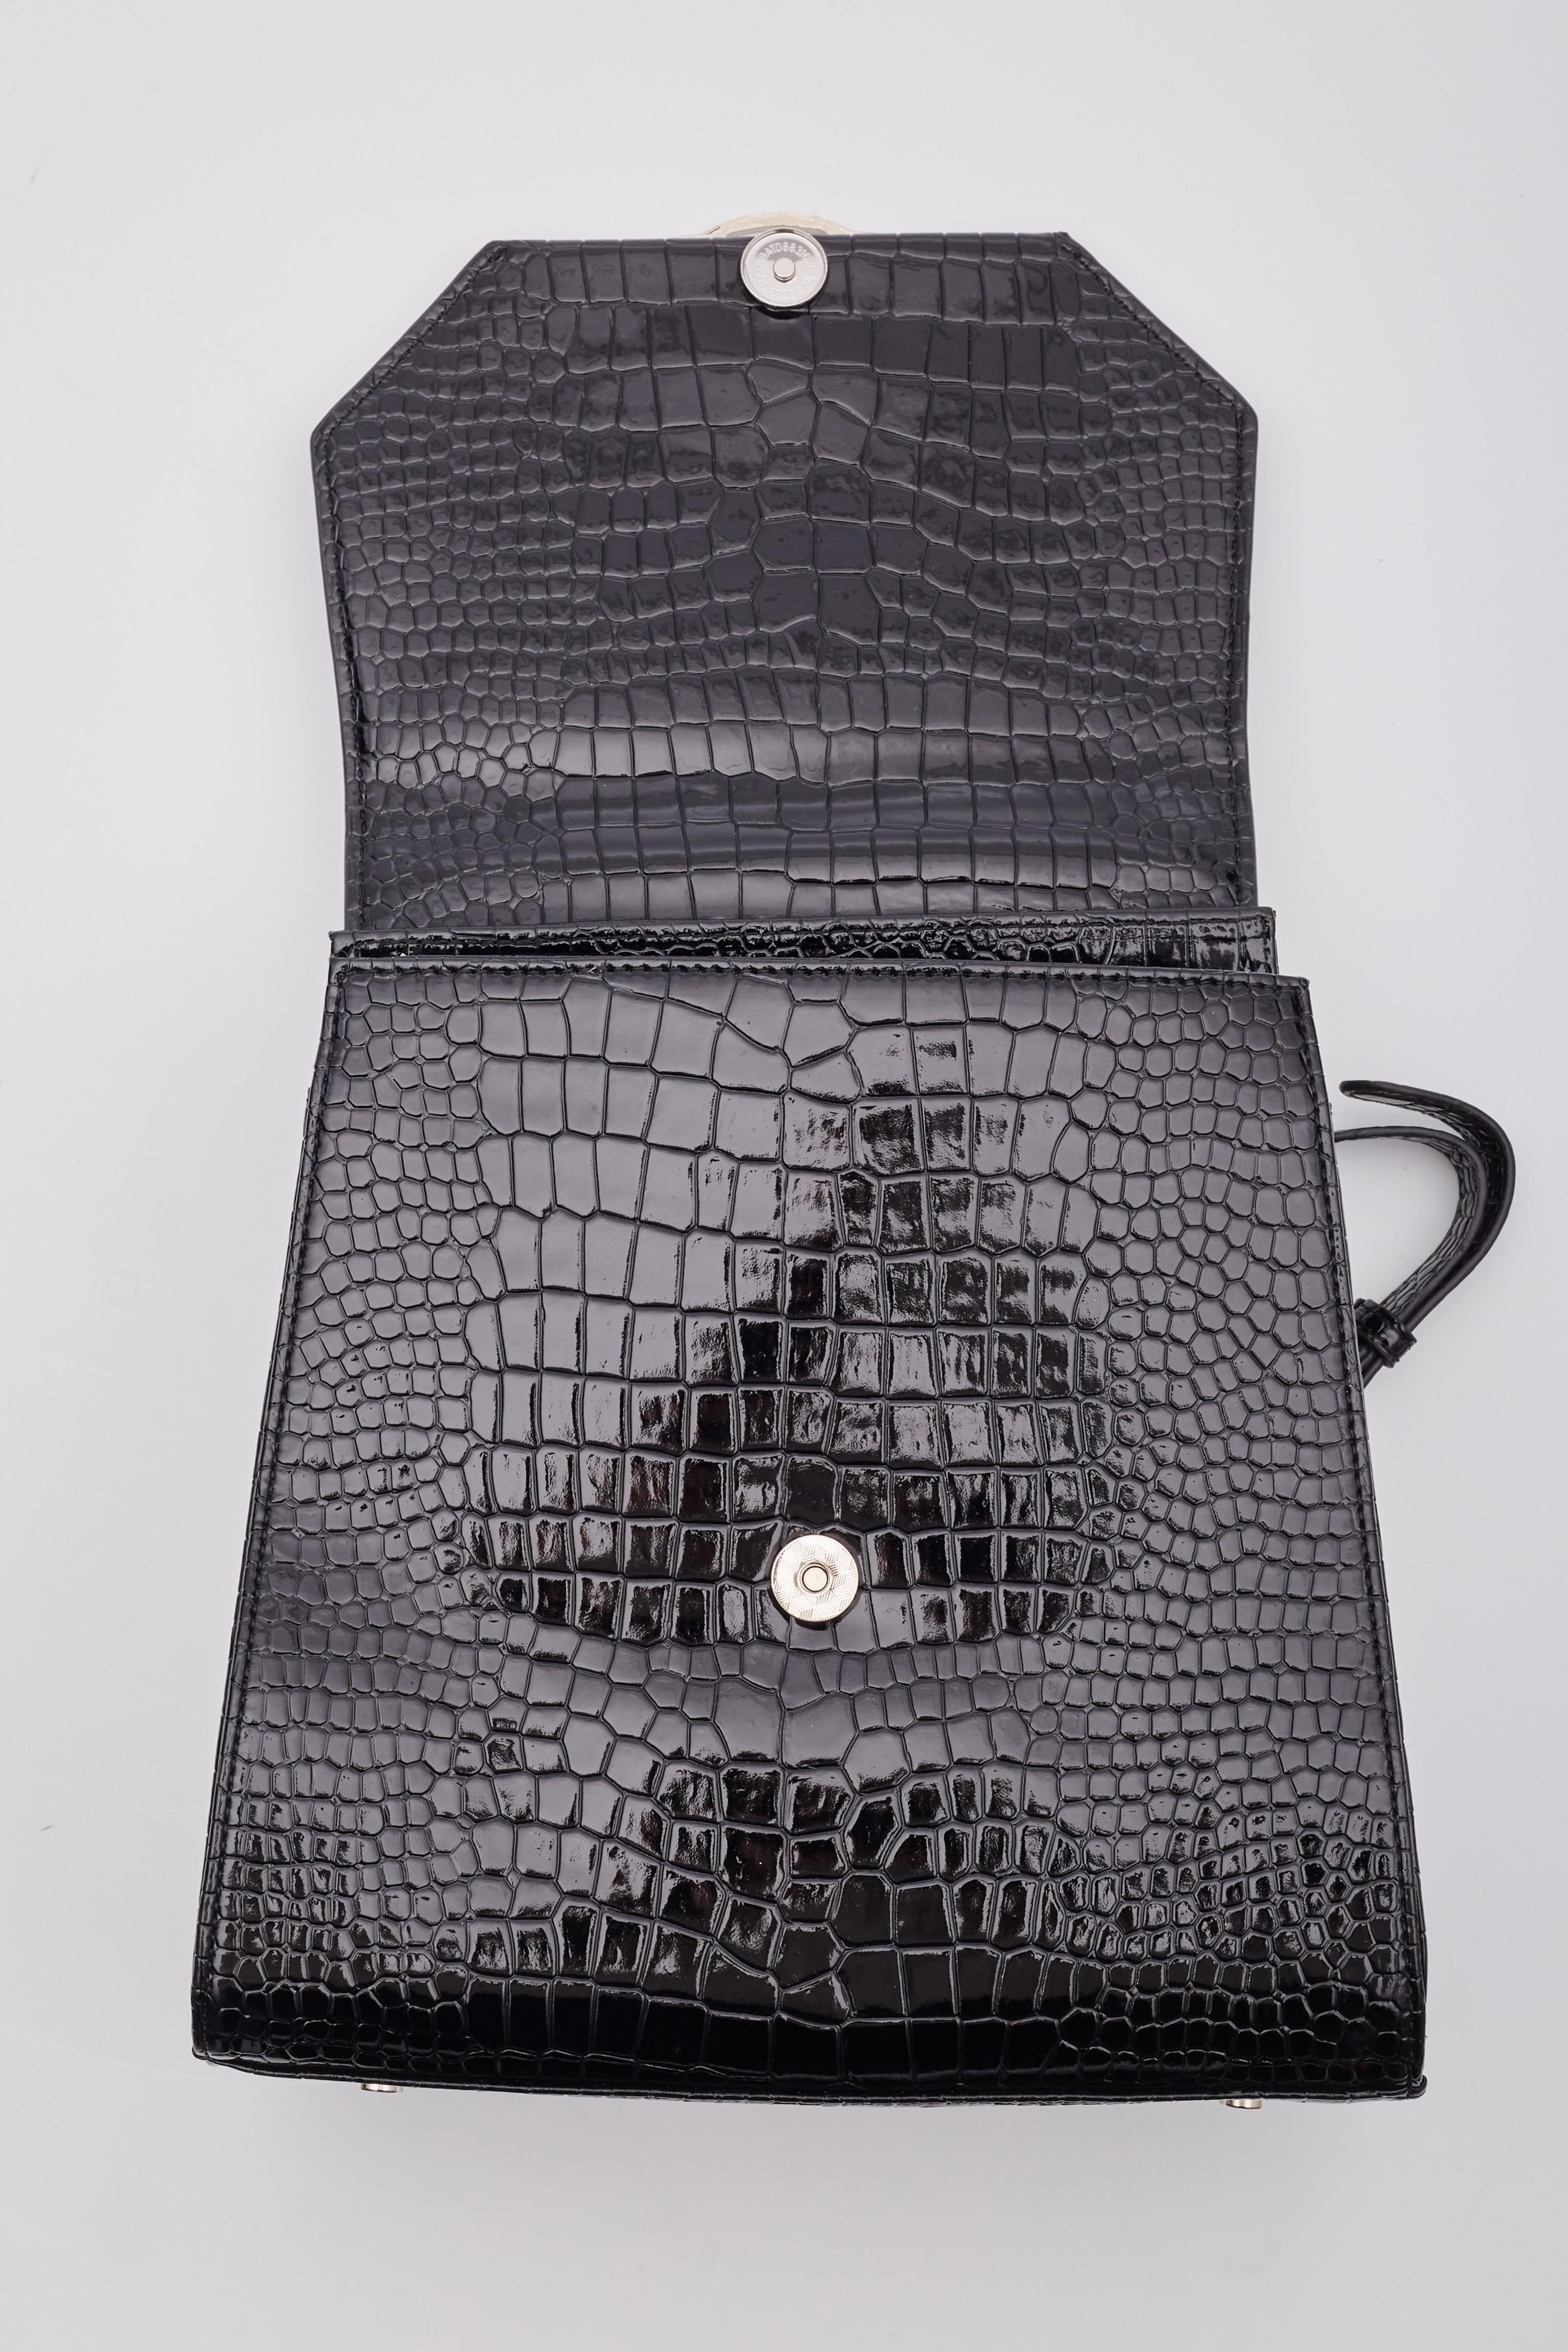 Vivienne Westwood Nana Black Croc Embossed Grace Backpack For Sale 5